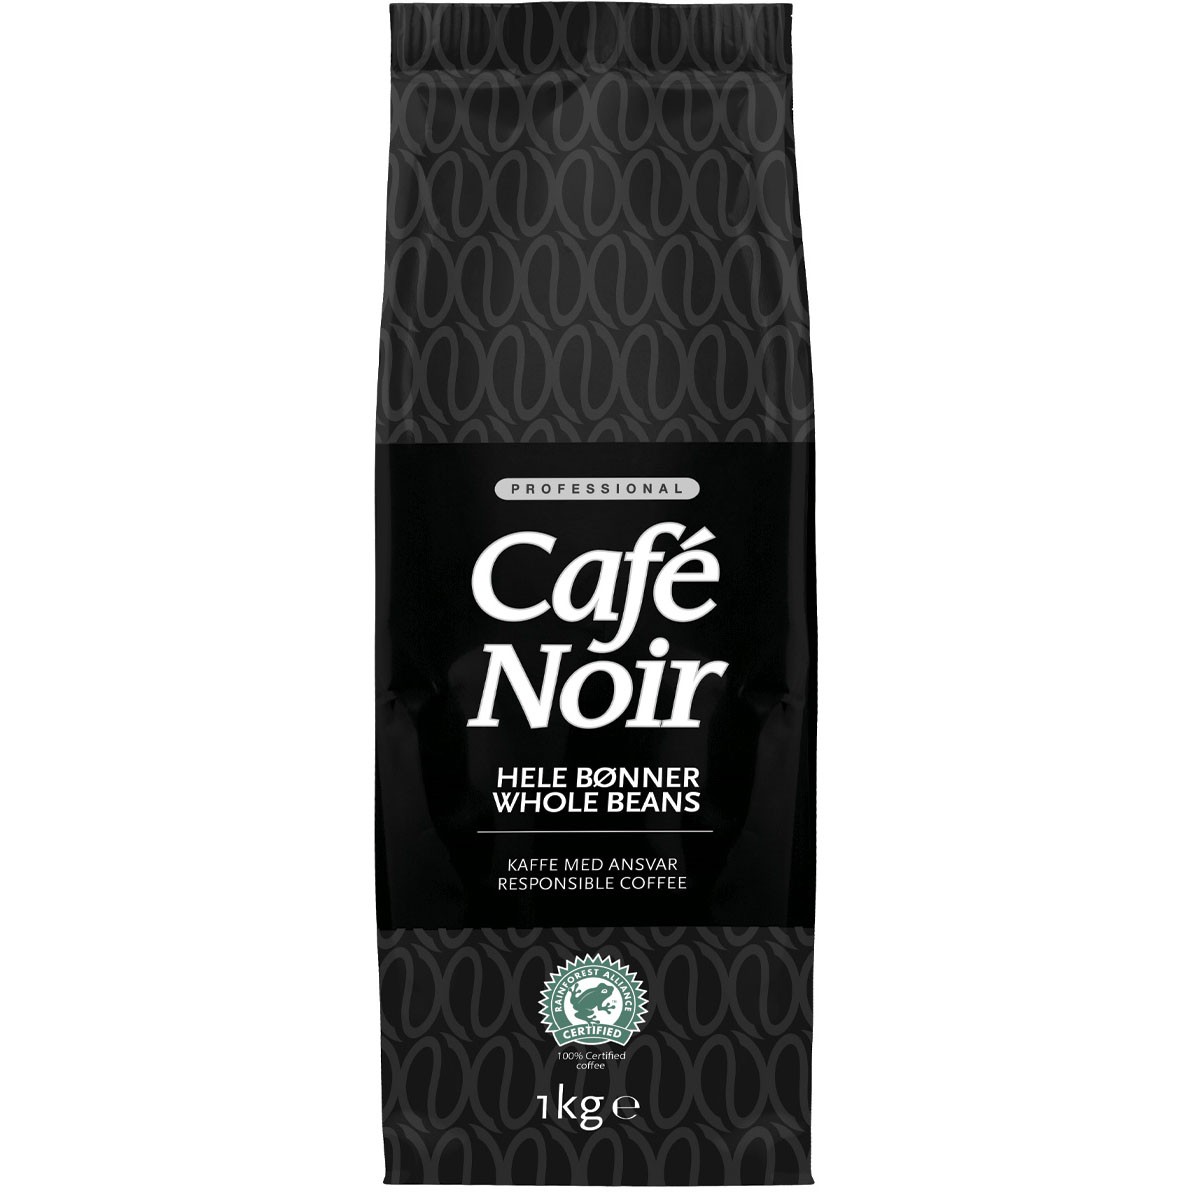 Café Noir Professional helbønne kaffe 1kg